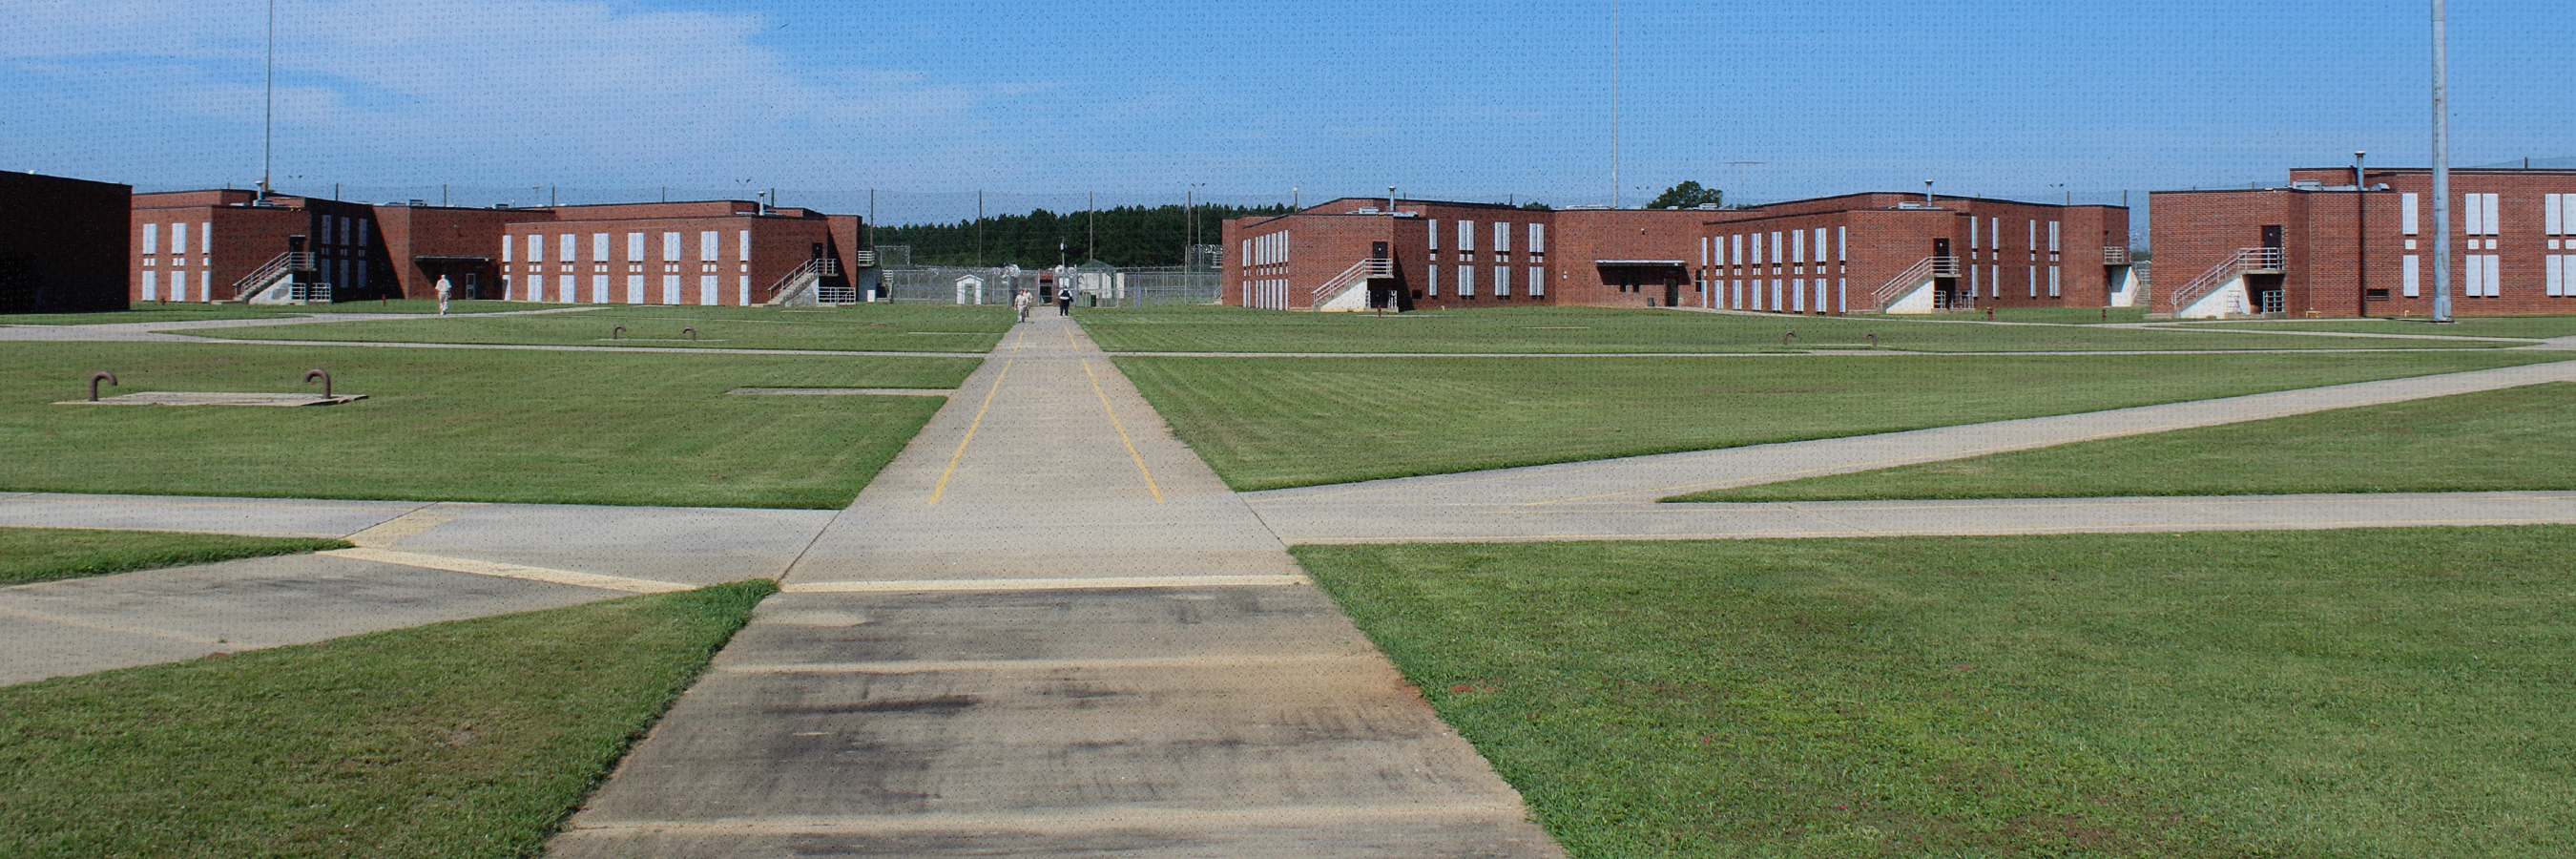 Photo of a prison yard